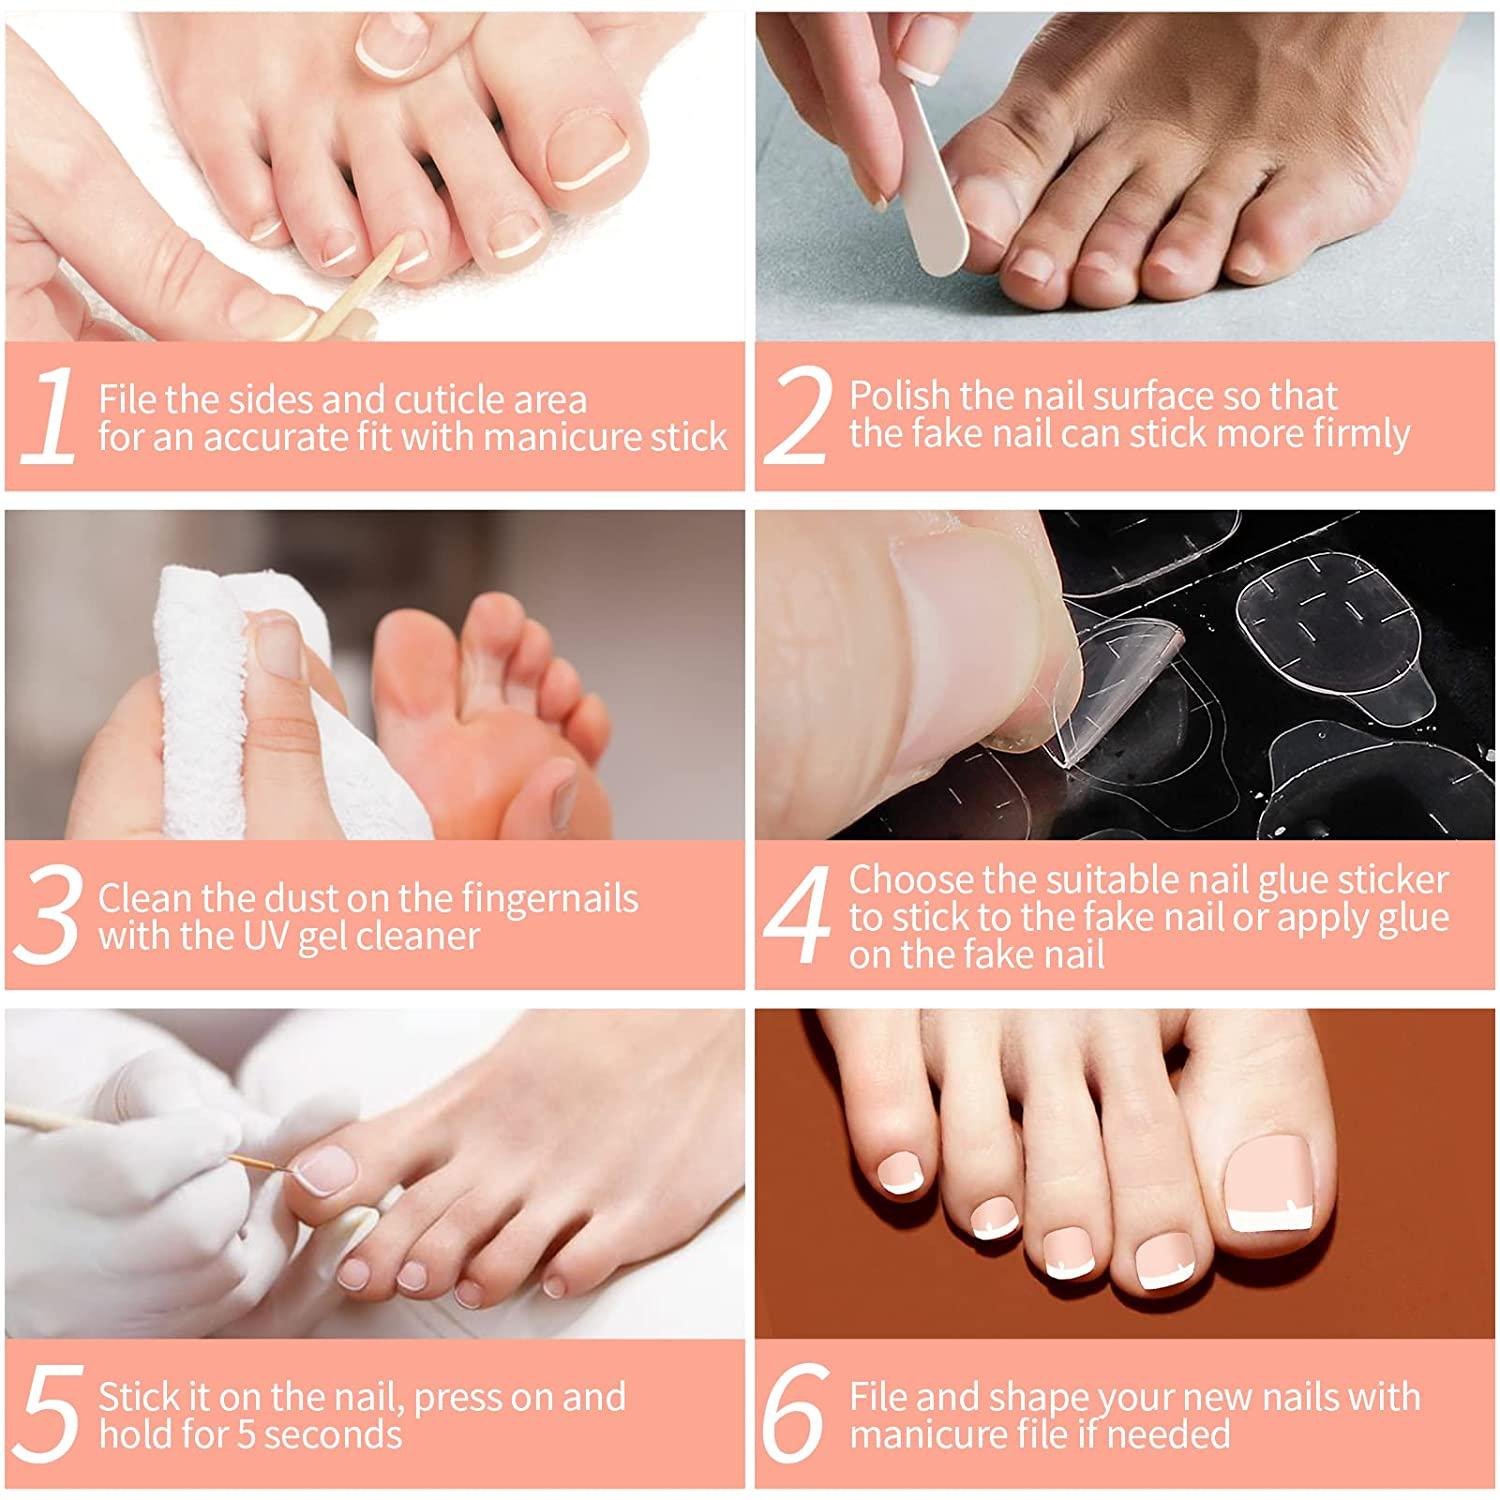 Toe nail damaged by high heels in nightclub - My Beauty Salon Website